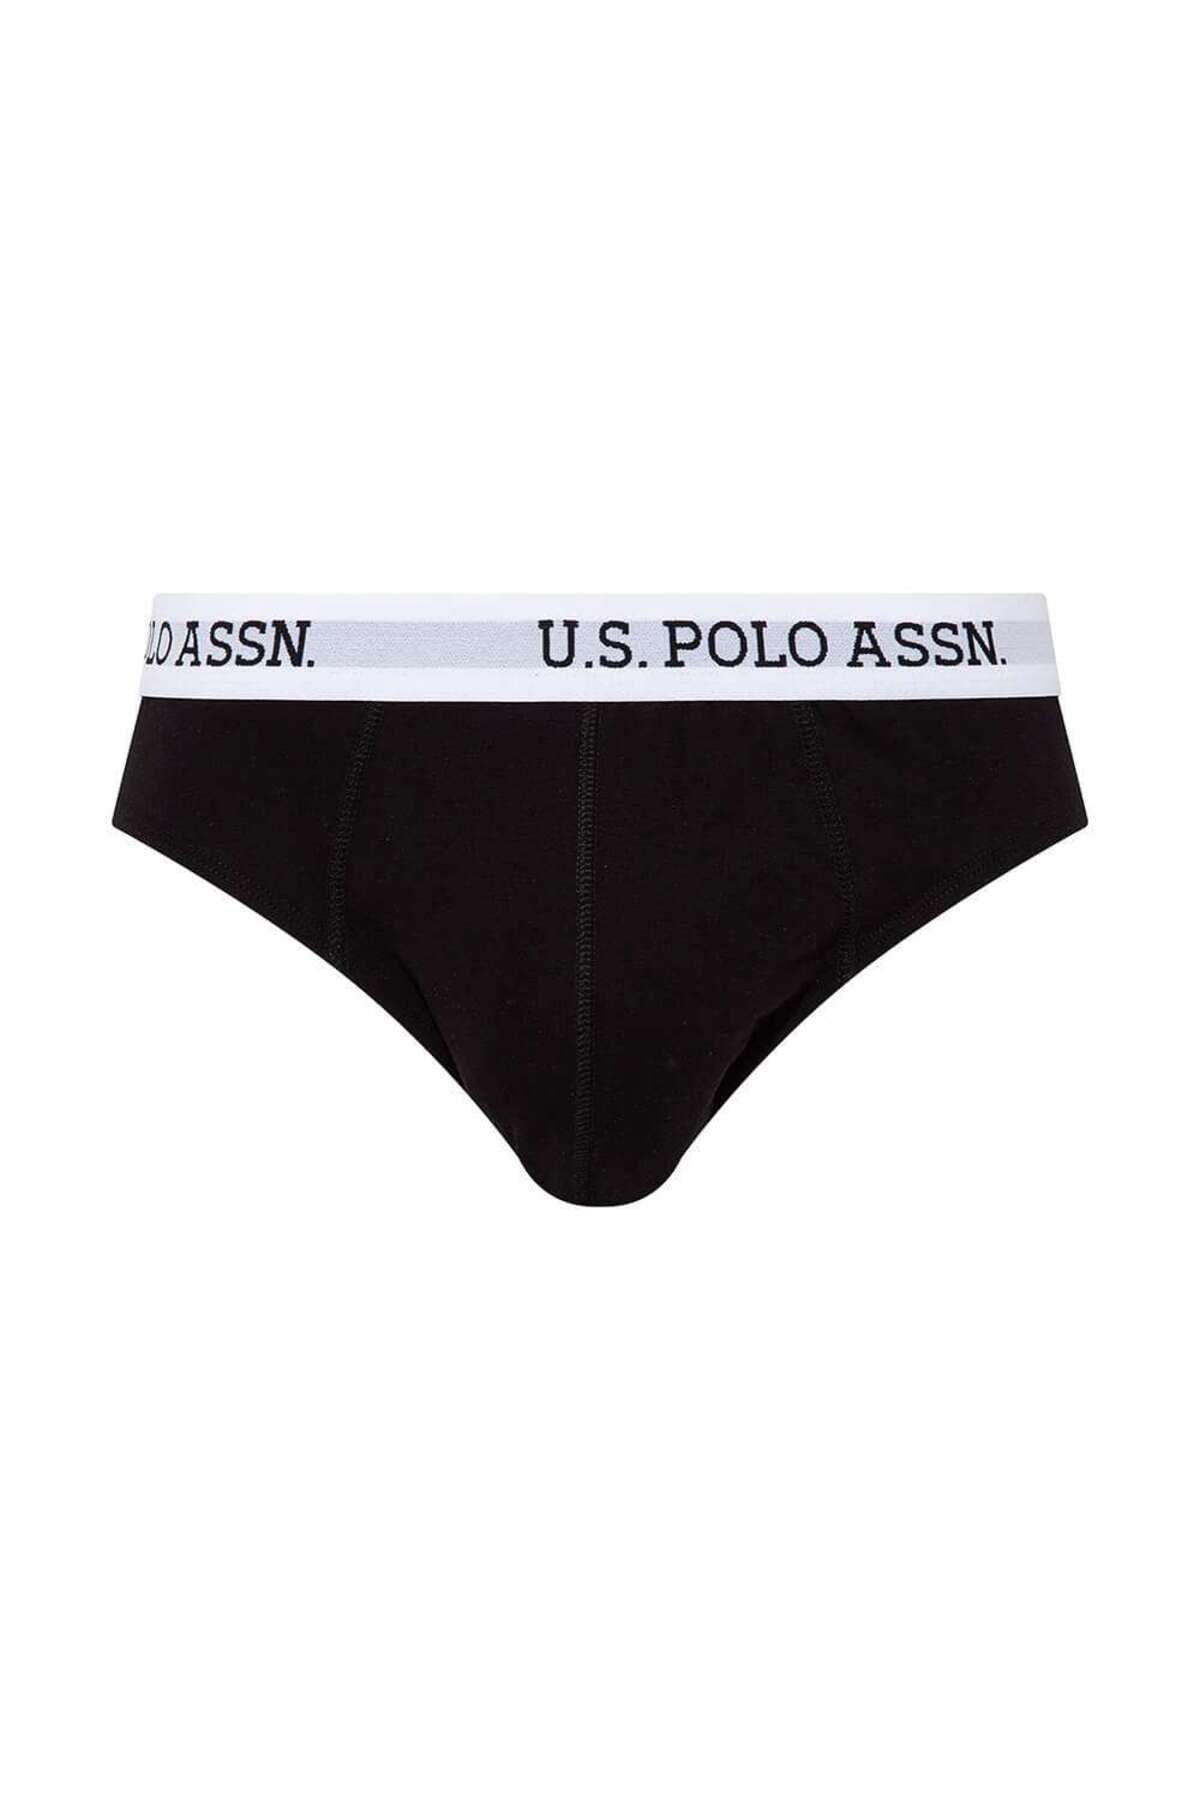 U.S. Polo Assn. Erkek Siyah Tekli Slip 80452